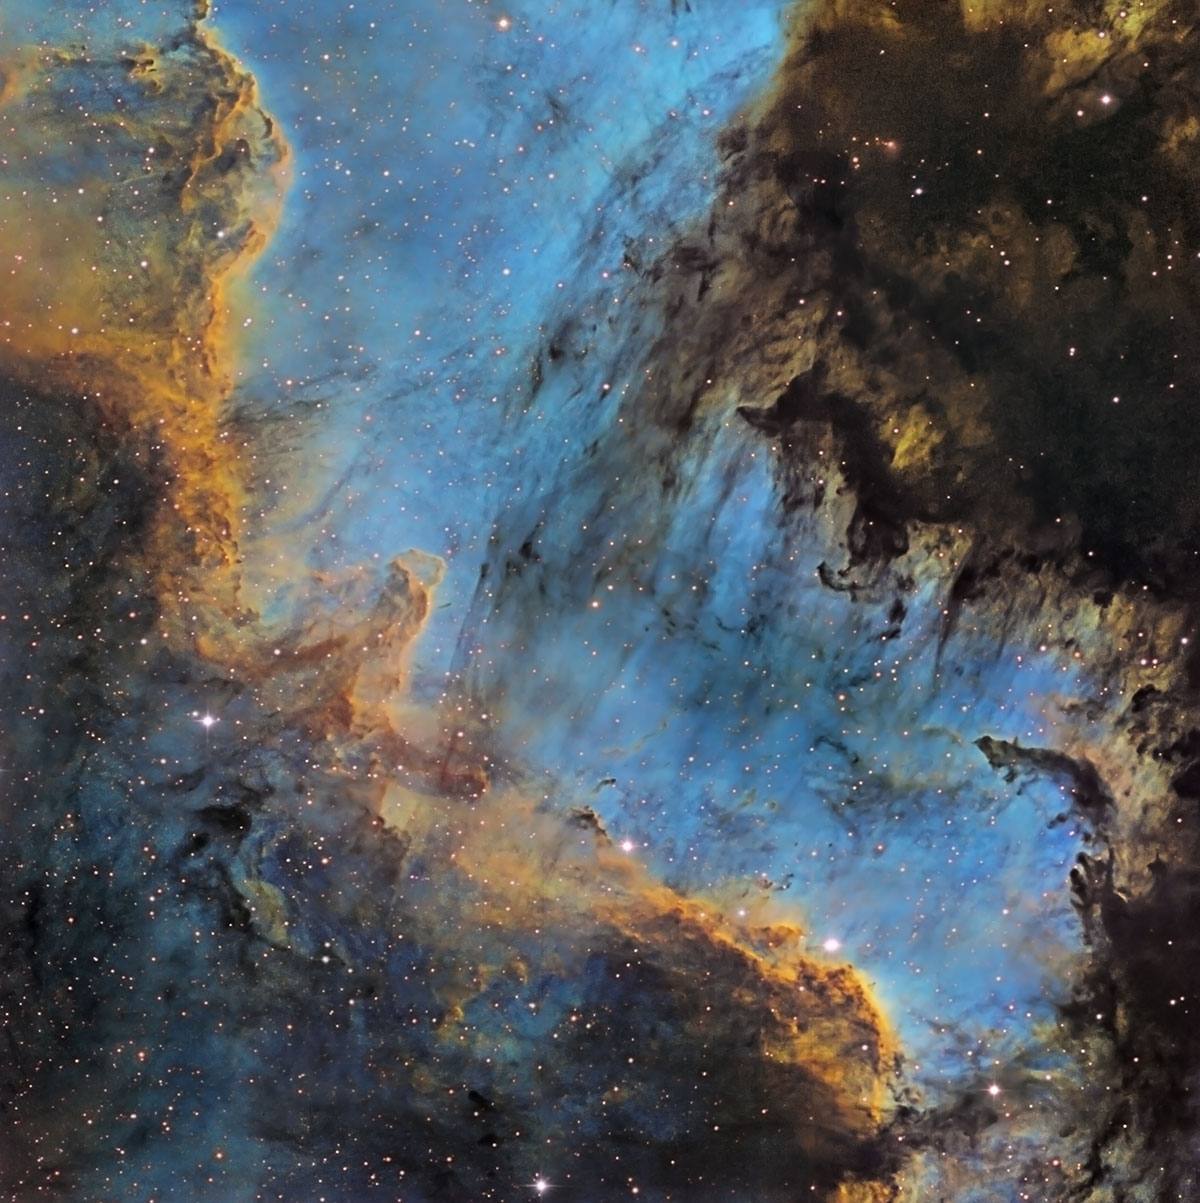 Cygnus Wall in NGC 7000